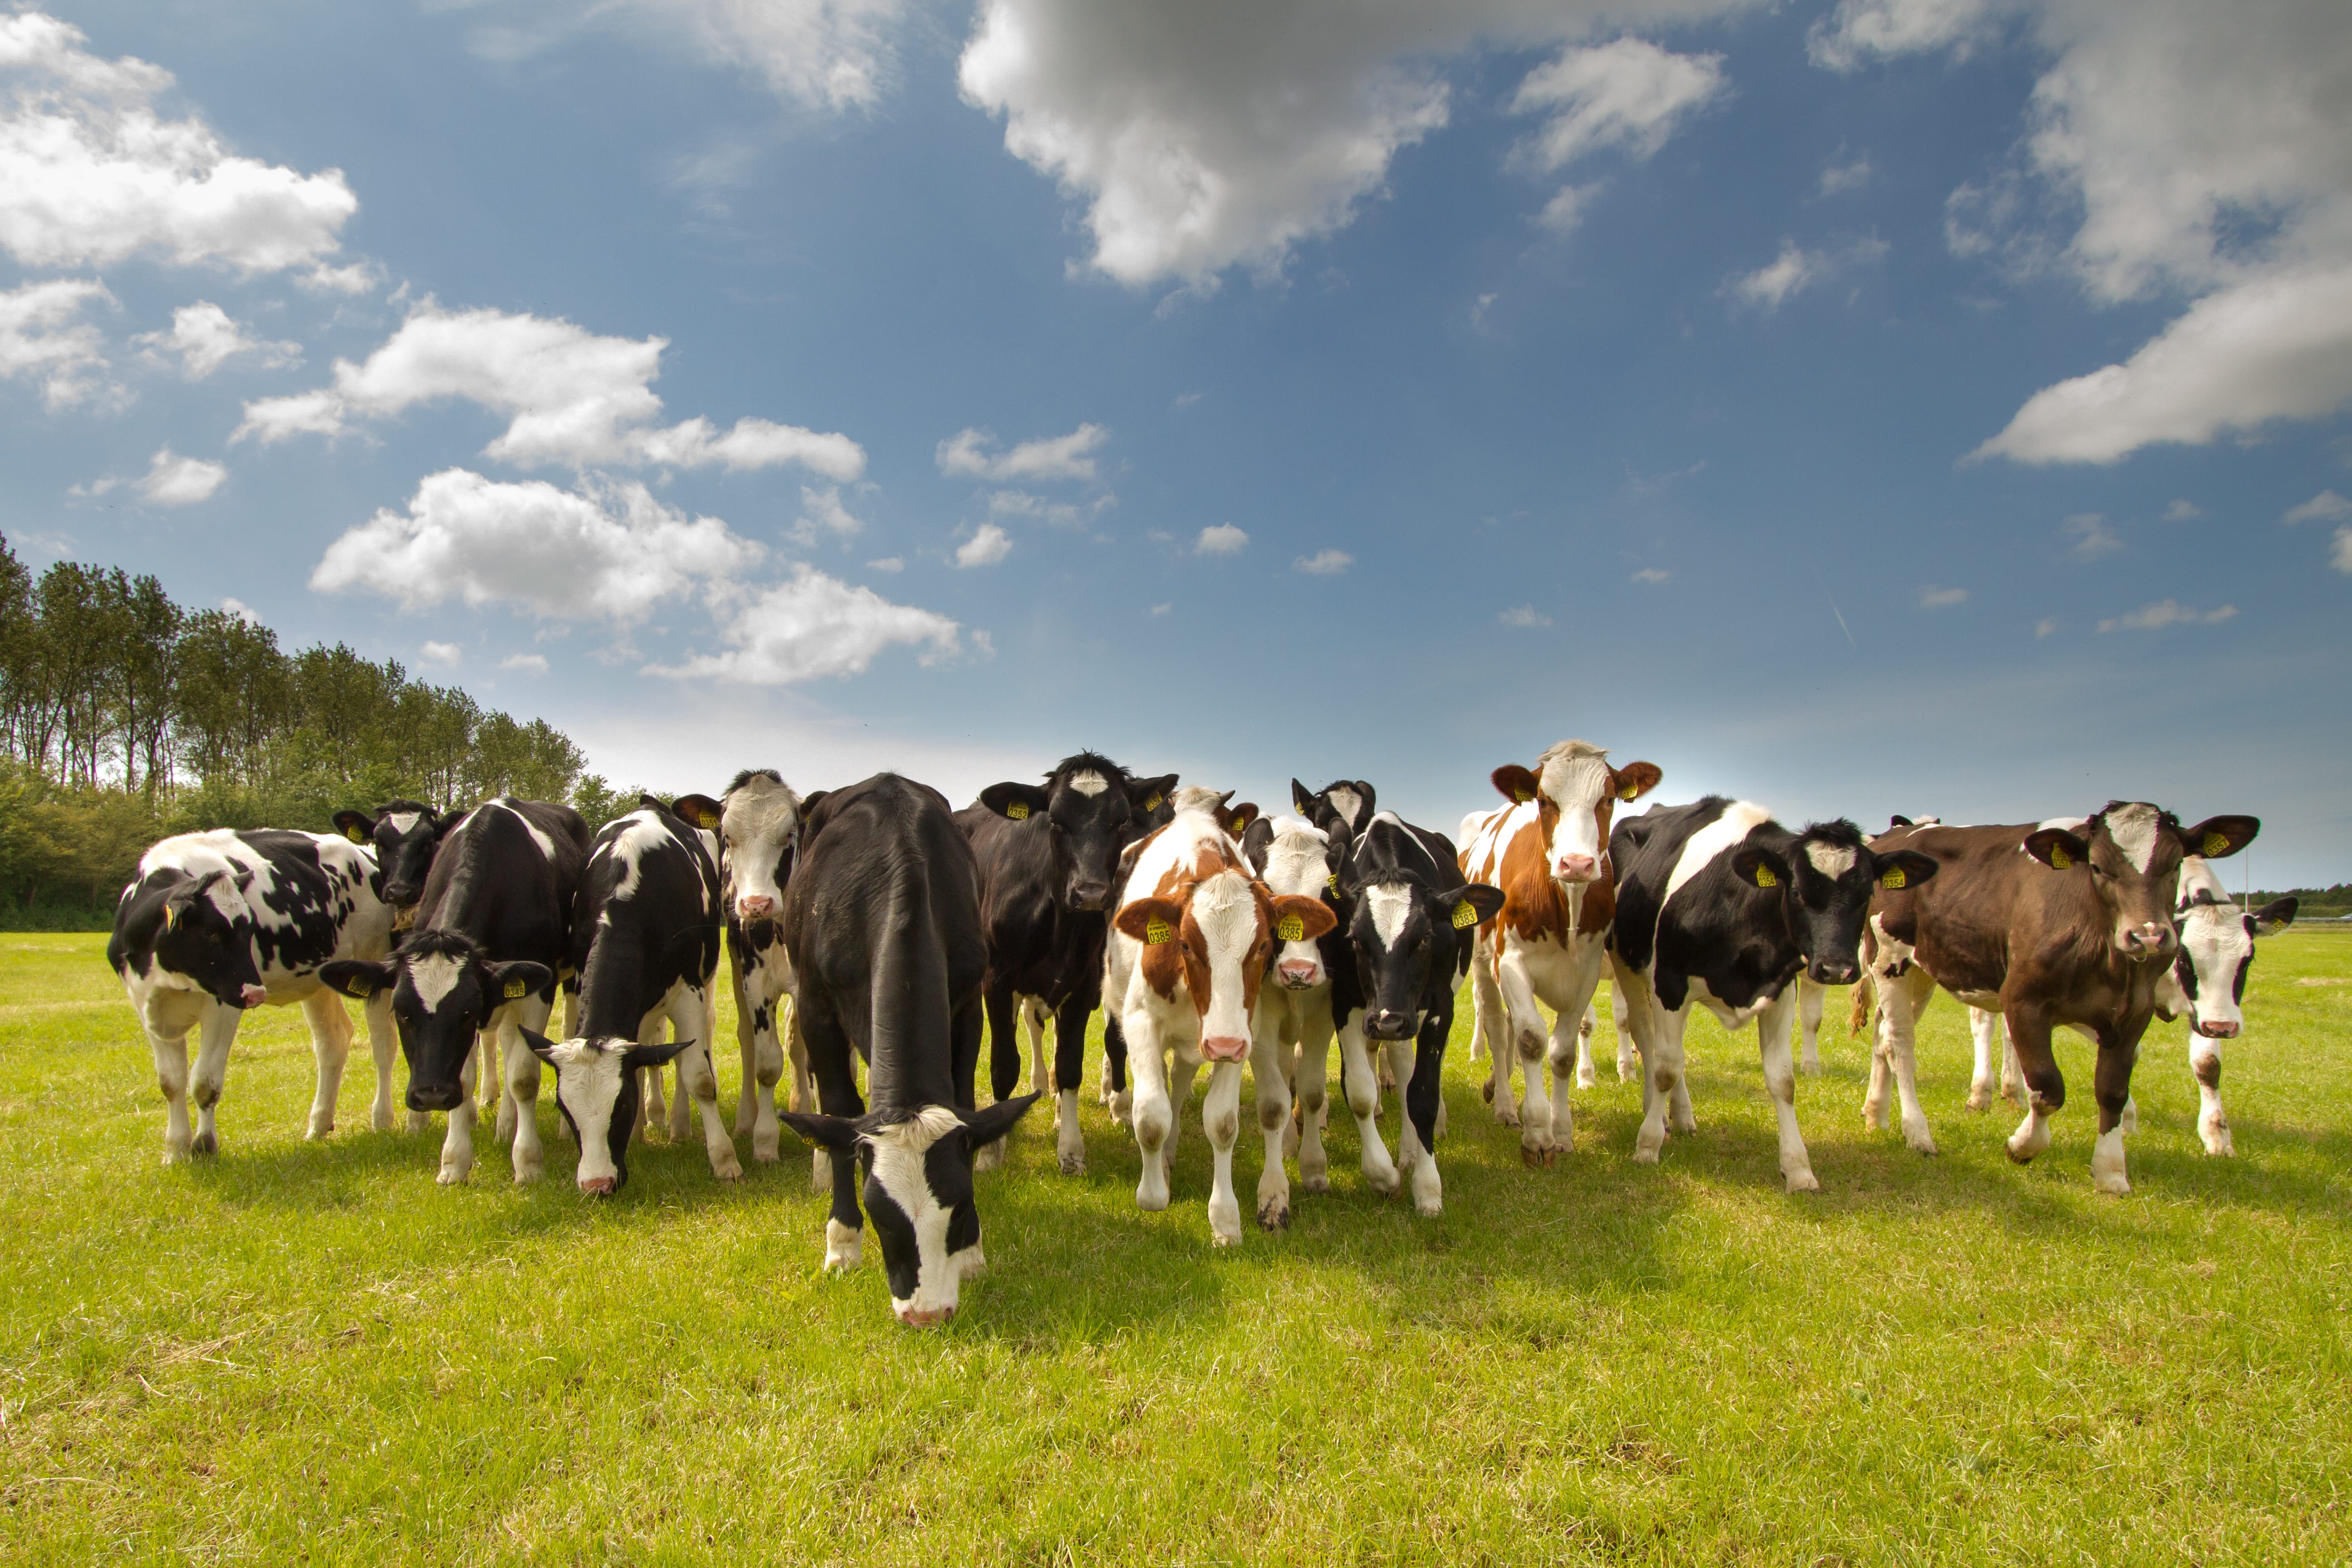 Звуки стадо коров. Ферма Голландия крупно рогатого скота. Стадо коров. Коровы на пастбище. Коровы на выпасе.